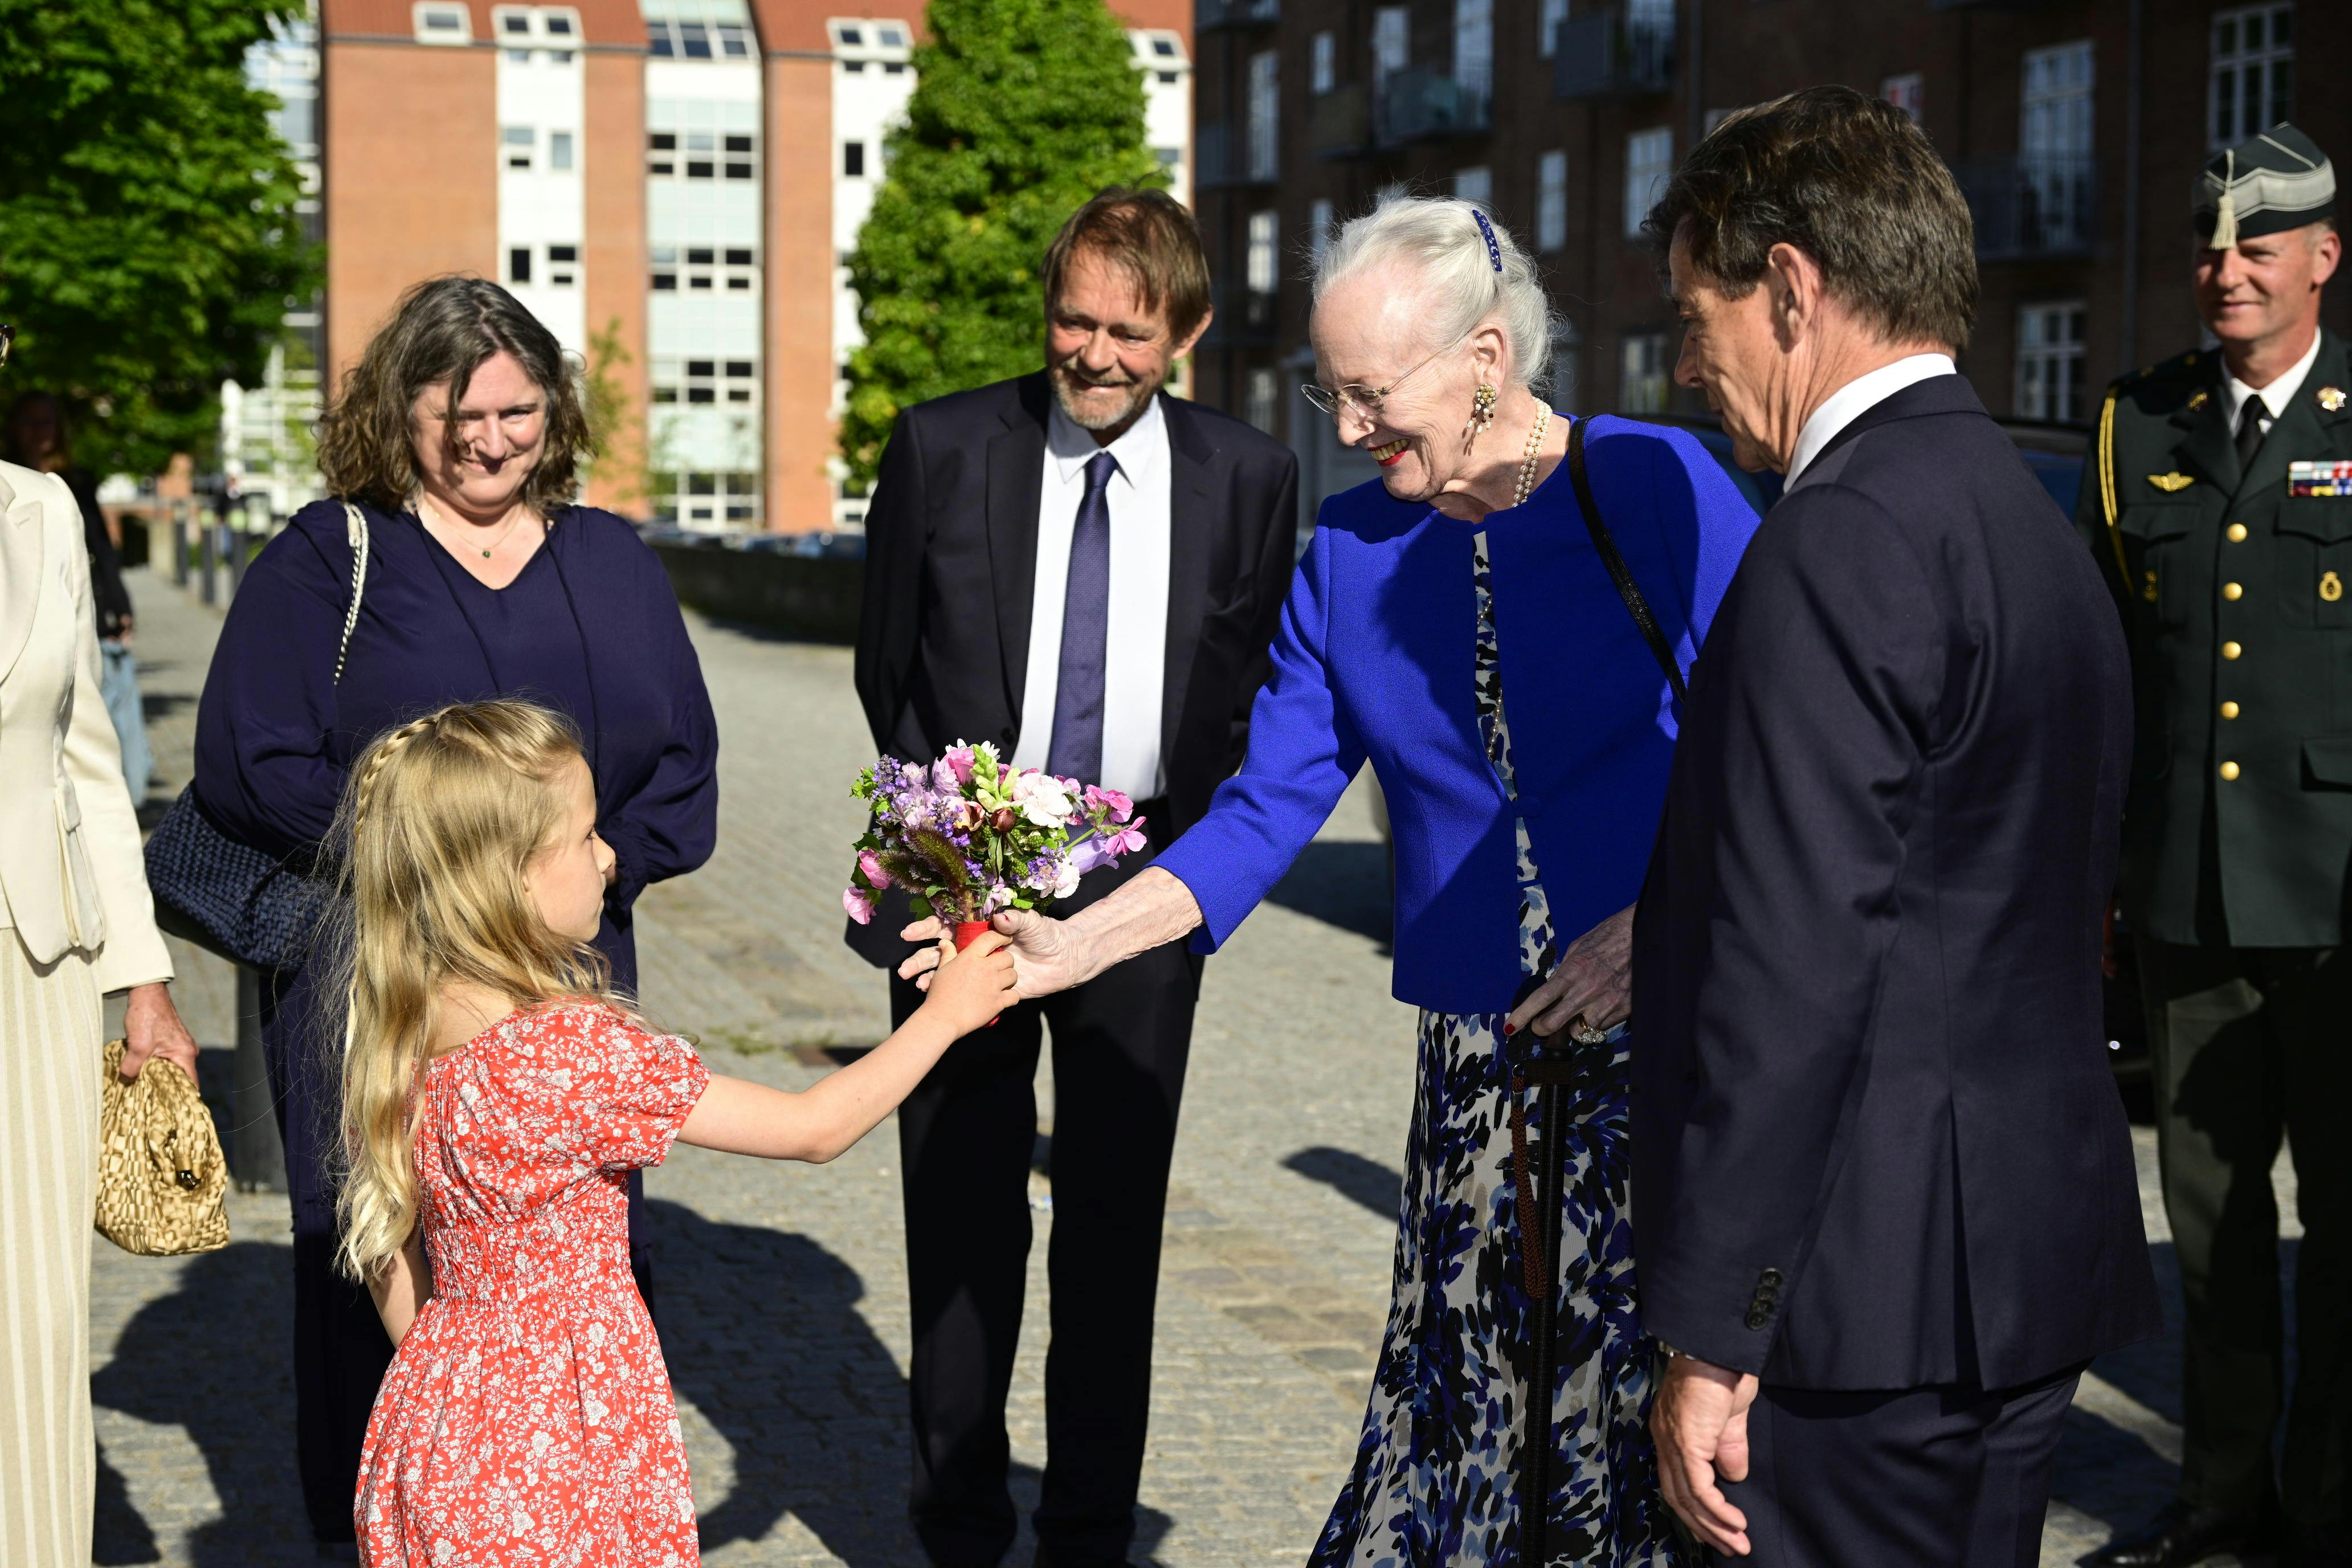 Dronning Margrethe modtog blomster fra lille Eleanor.
